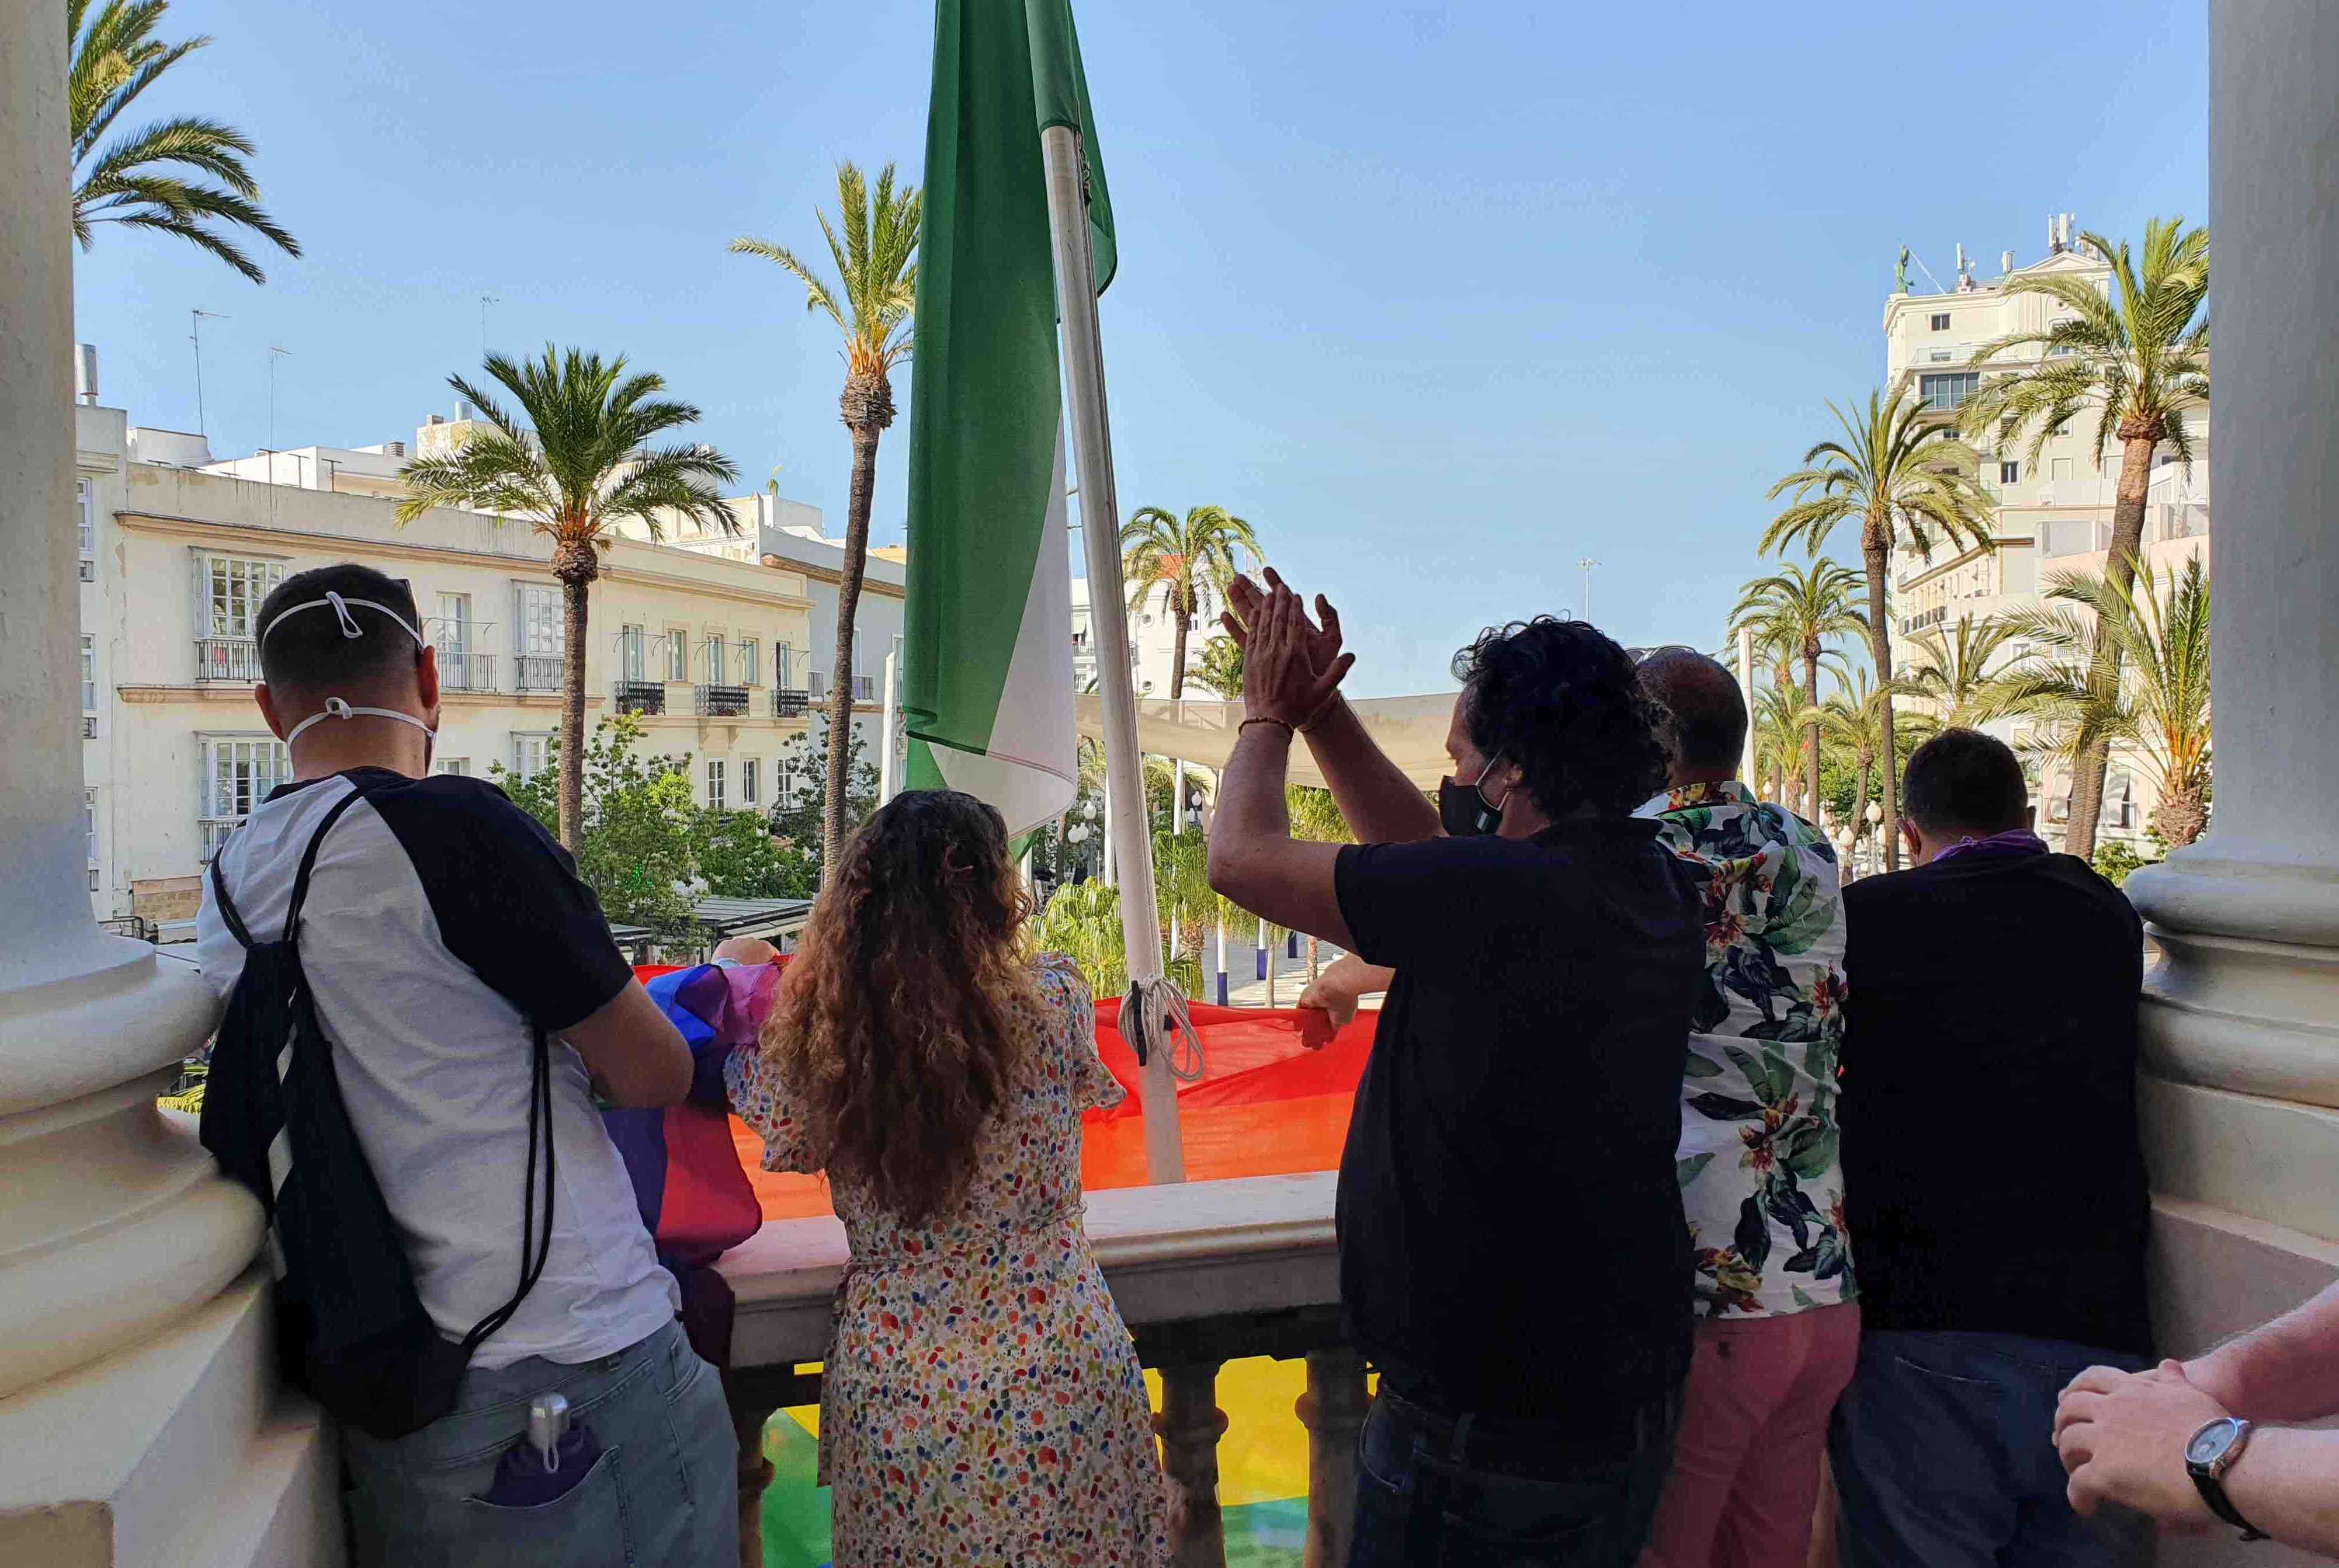 El alcalde de Cádiz, en primer término, aplaude, tras arriar la bandera LGTBI por orden judicial.